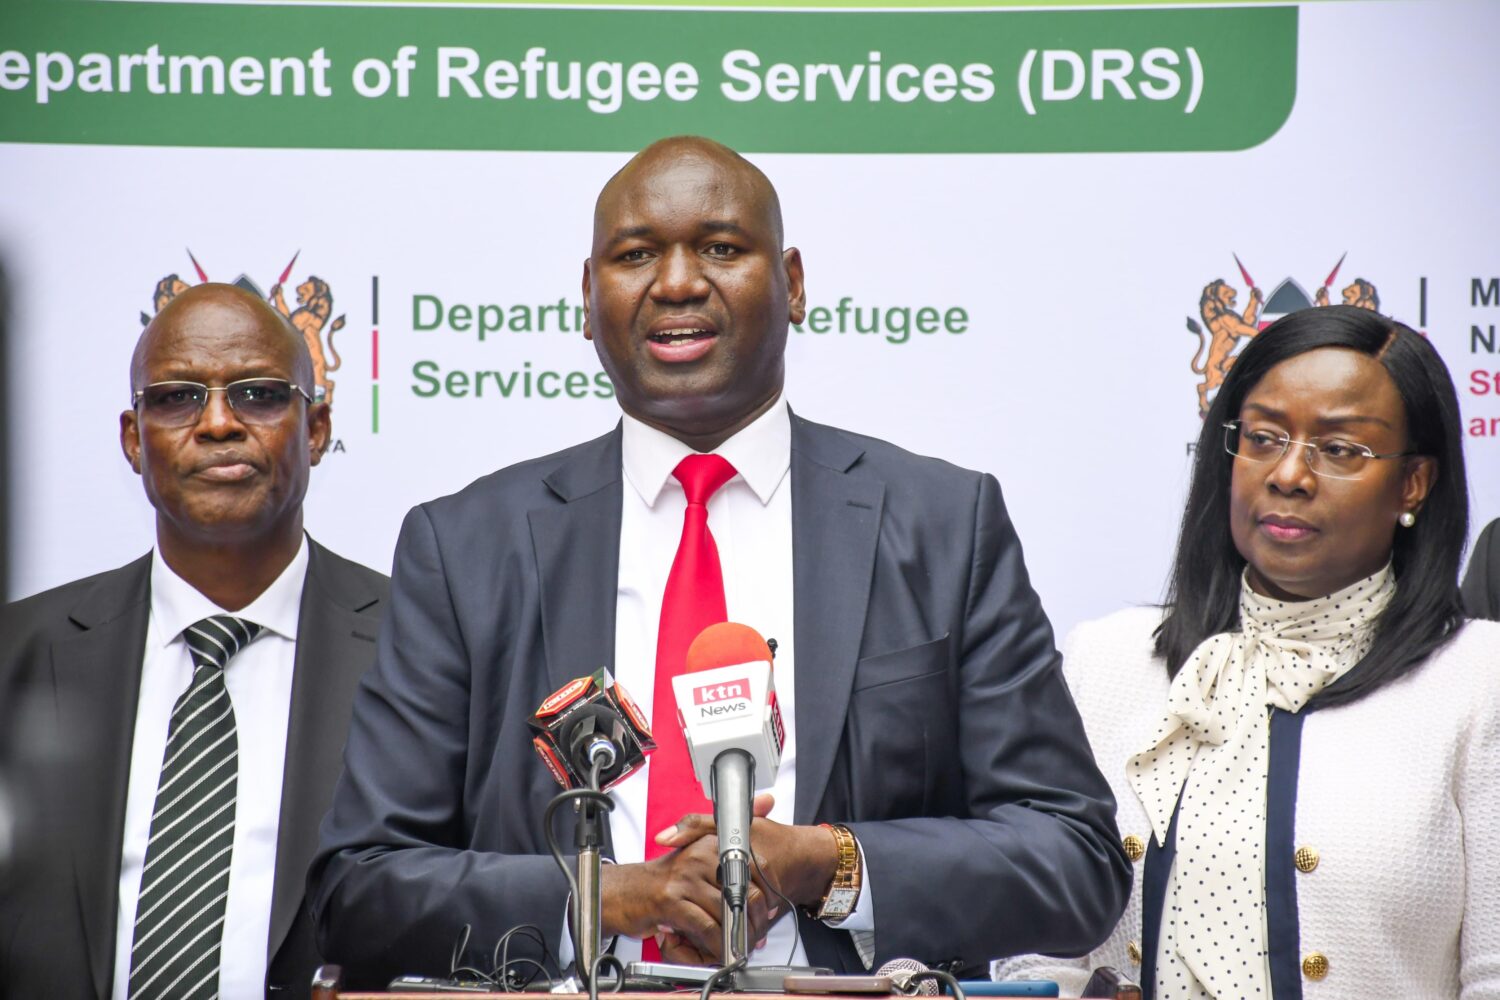 Daadab, Kakuma camps to be municipalities in Refugees Integration Plan